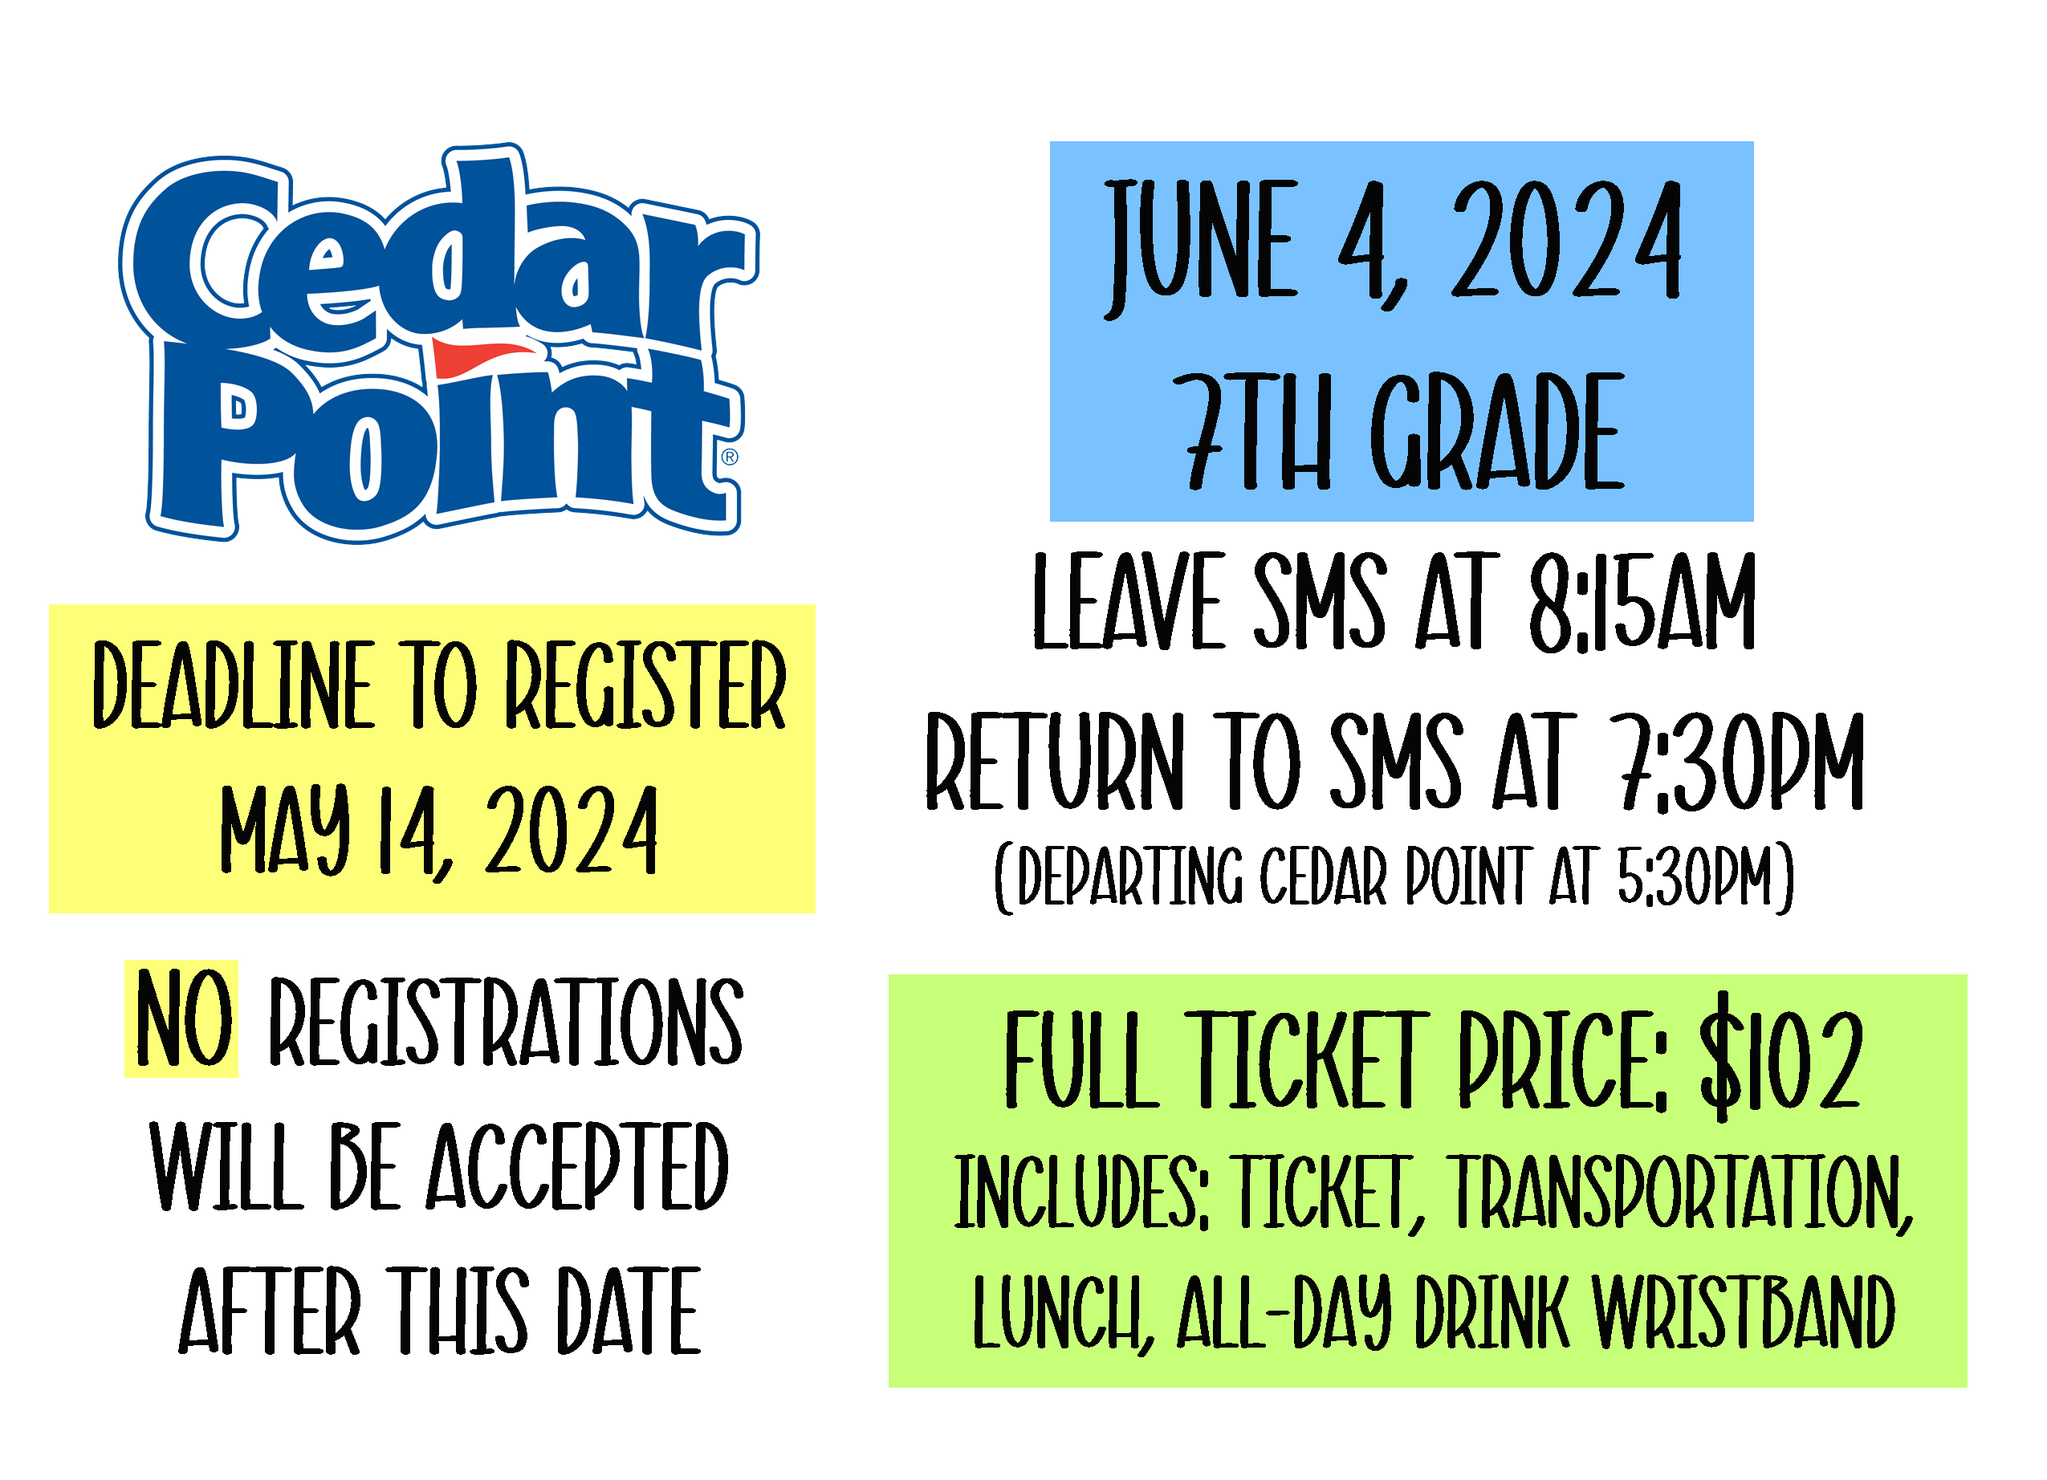 Cedar Point June 4, 2024. No registrations after May 14, 2024